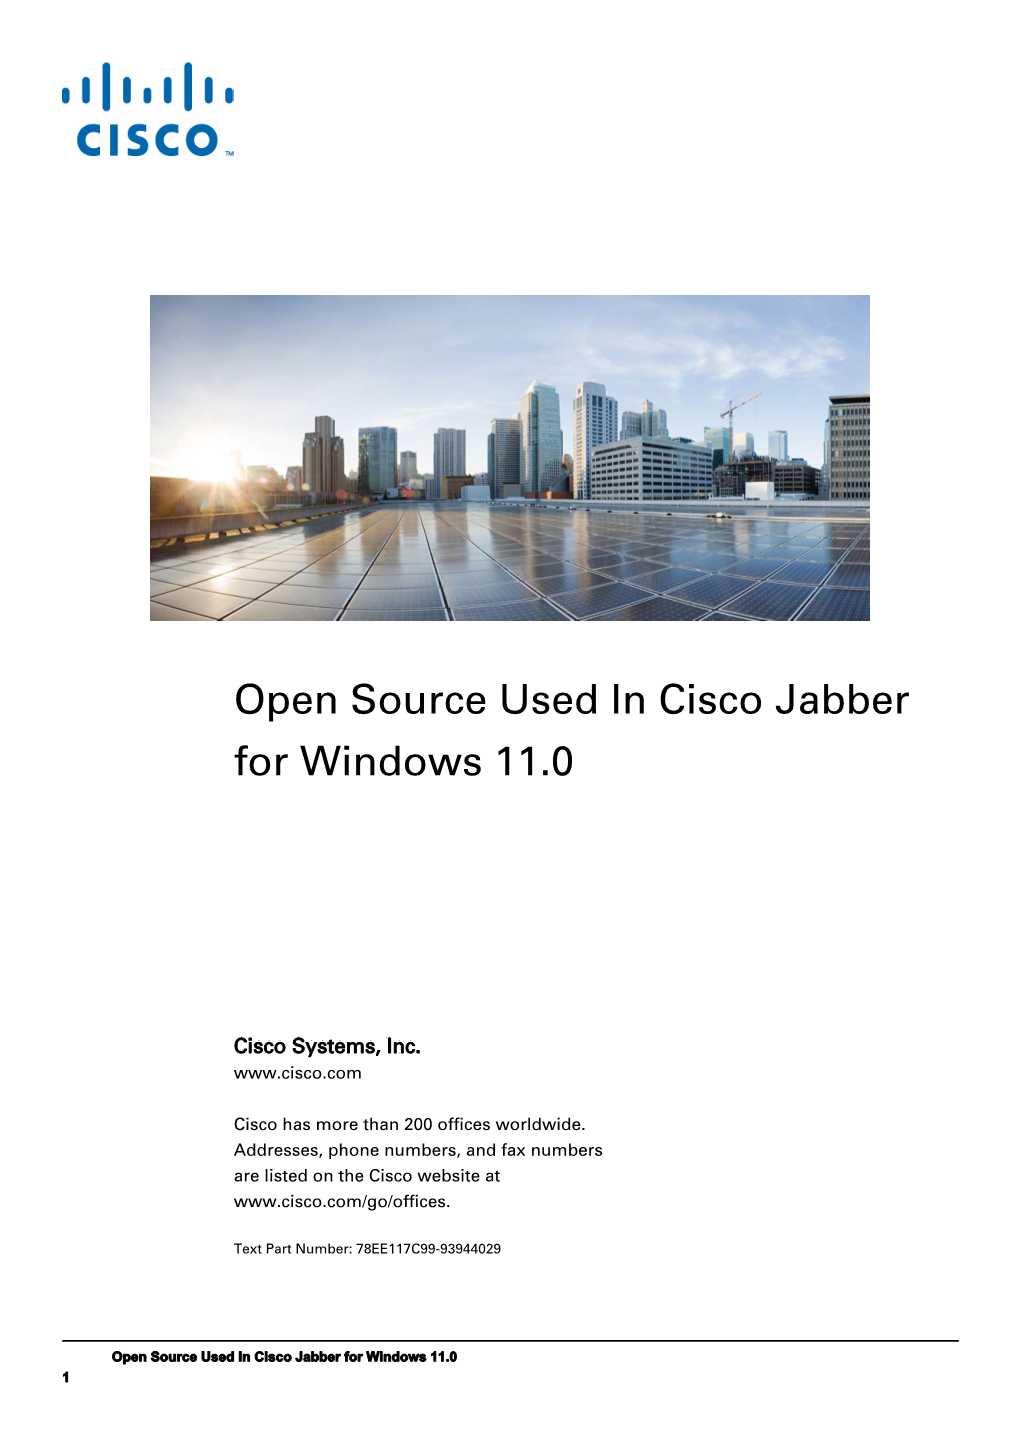 Cisco Jabber for Windows 11.0 Licensing Information